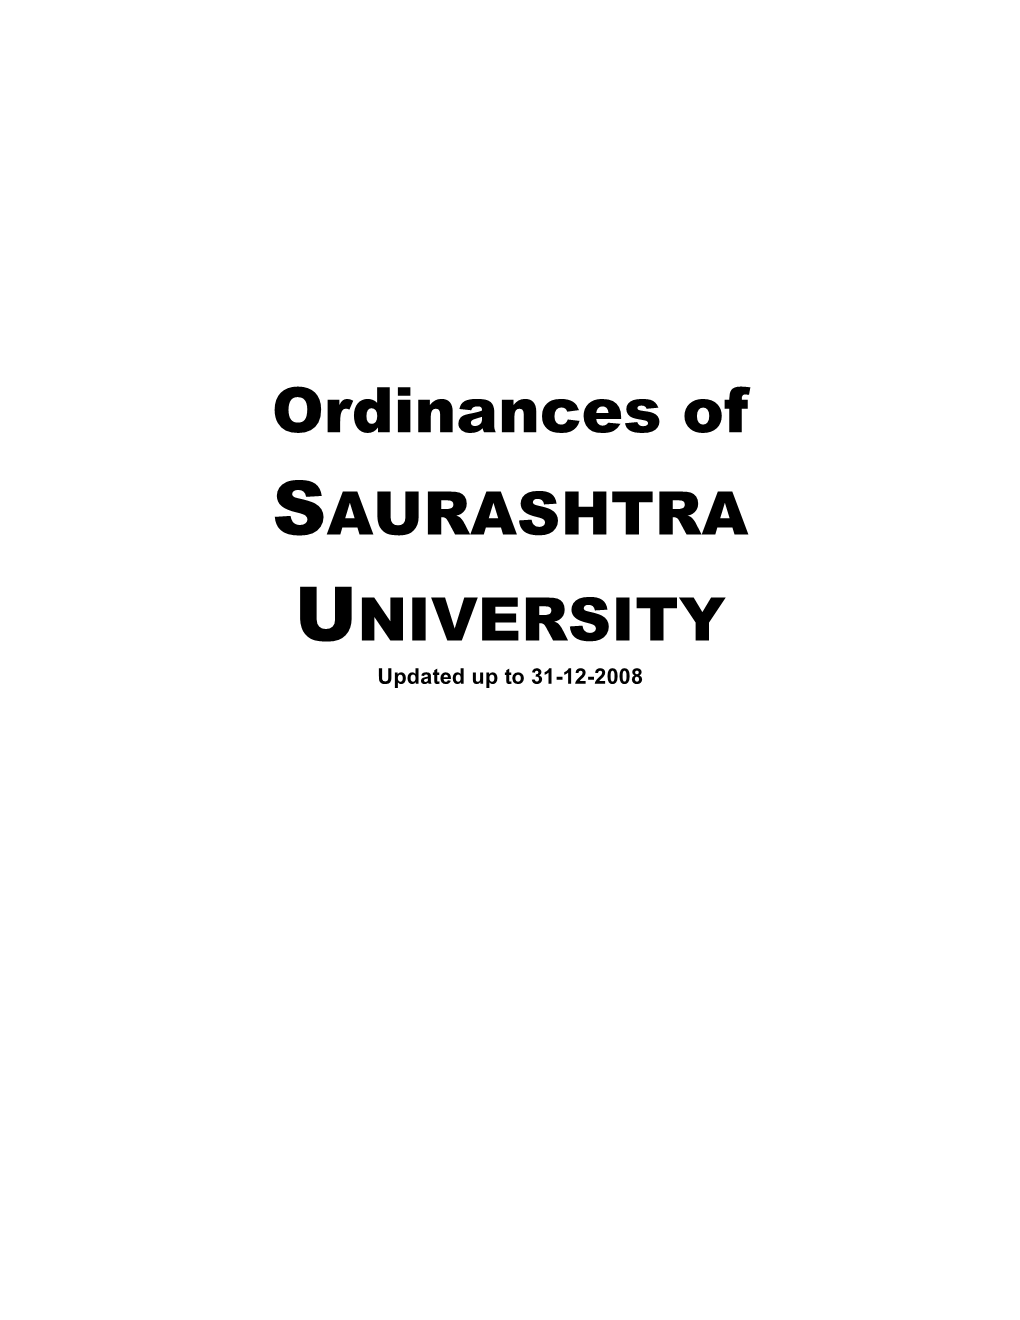 Ordinances of Saurashtra University